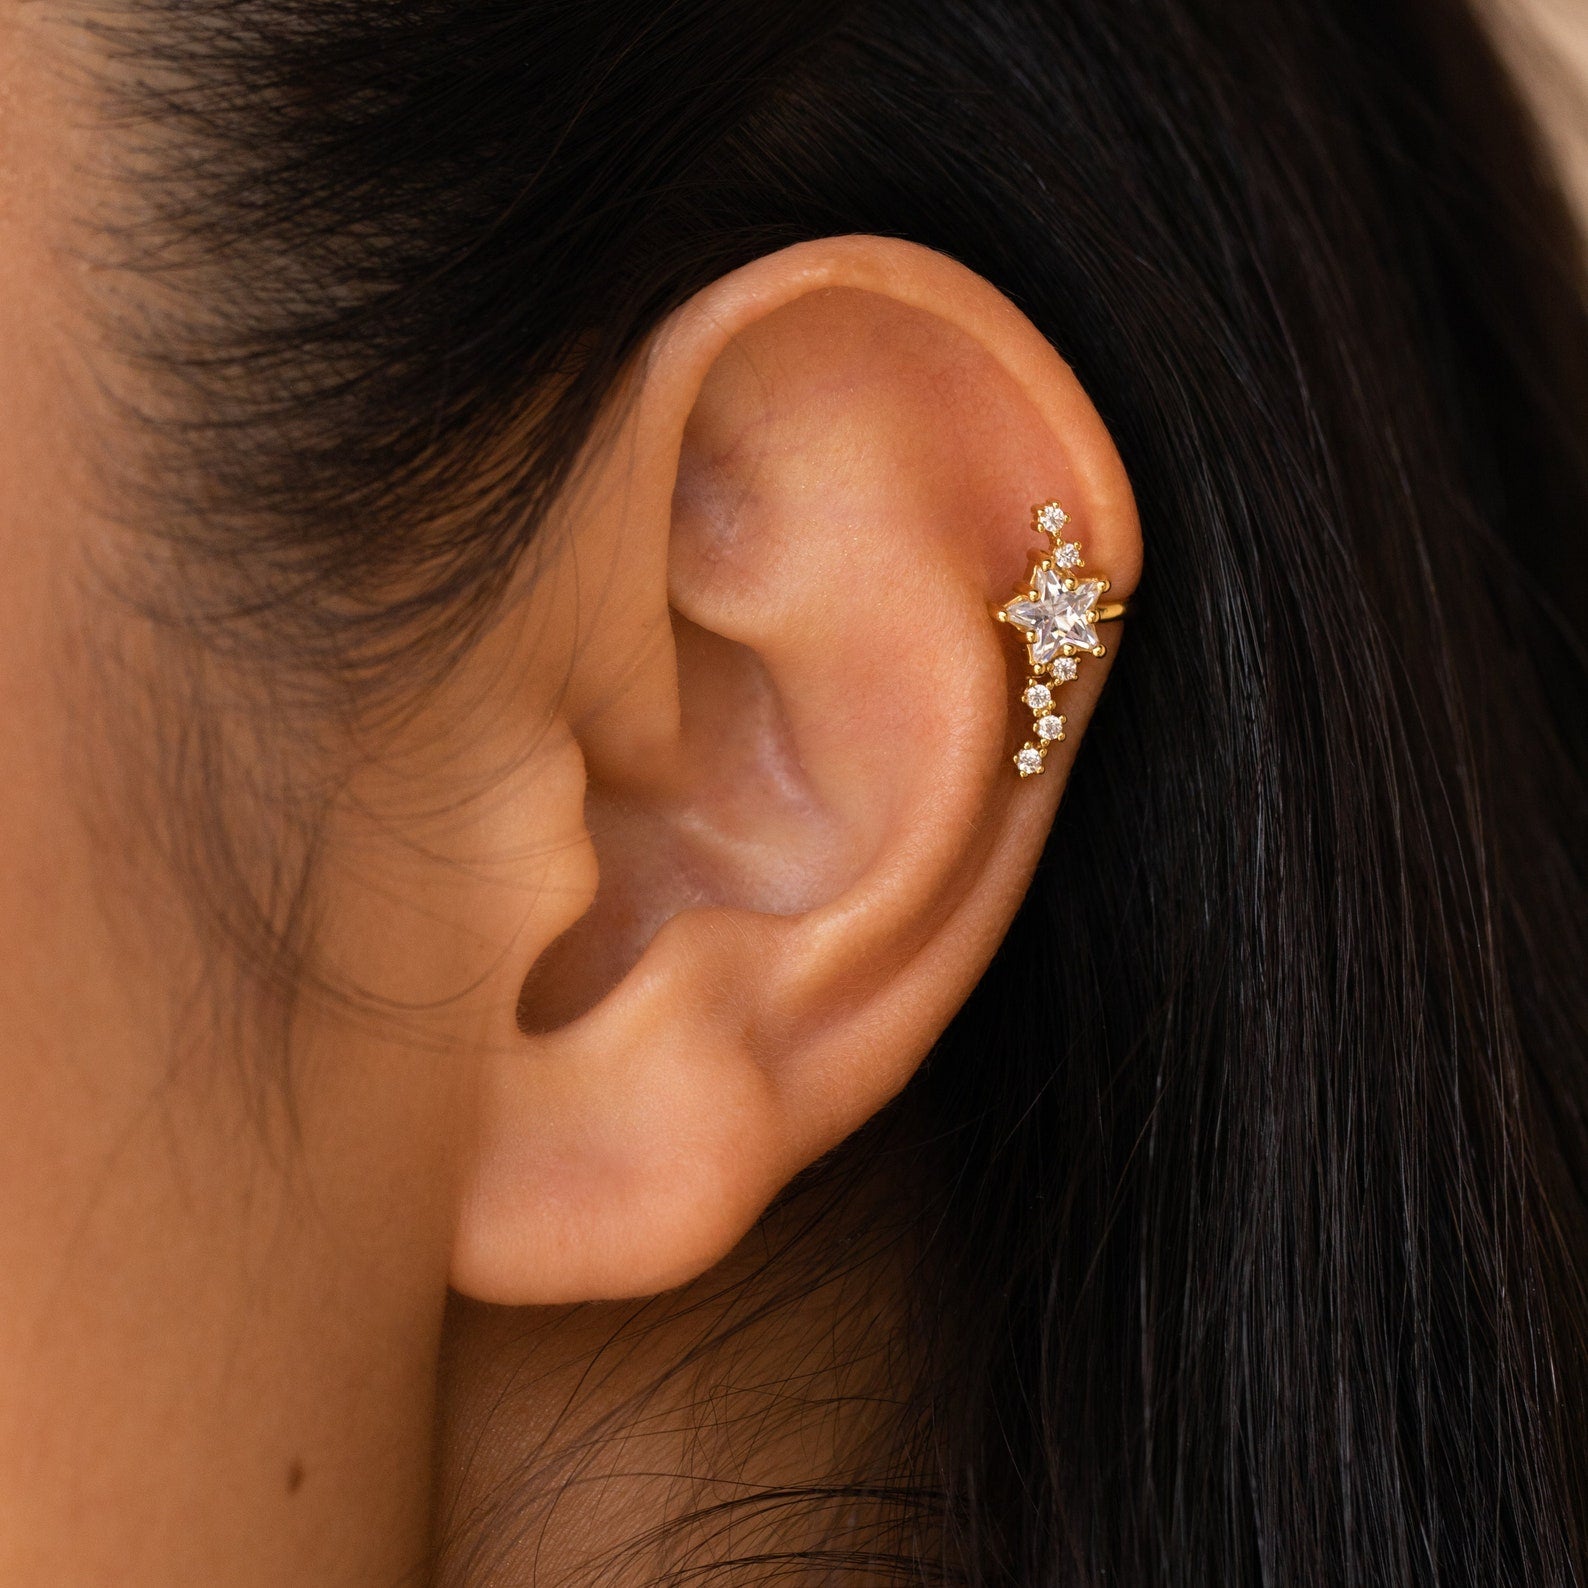 North Star Ear Cuffs - No Piercing Needed - 925 Silver